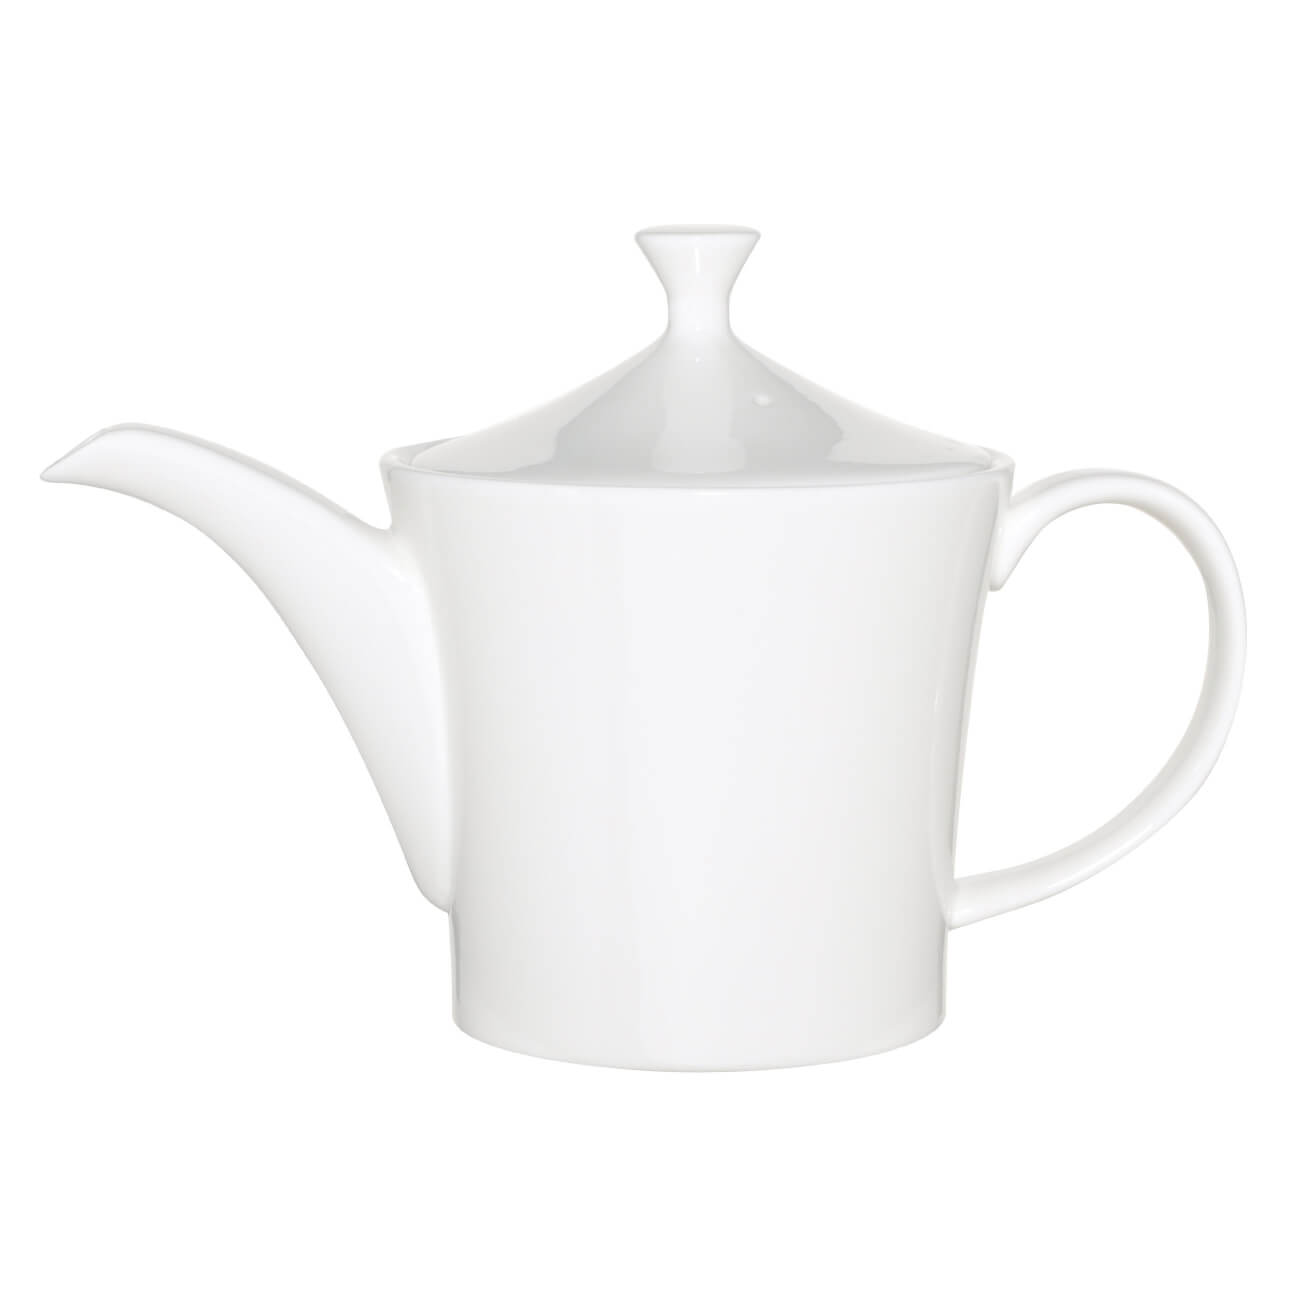 Чайник заварочный, 800 мл, фарфор F, белый, Ideal white чайник заварочный 1200 мл